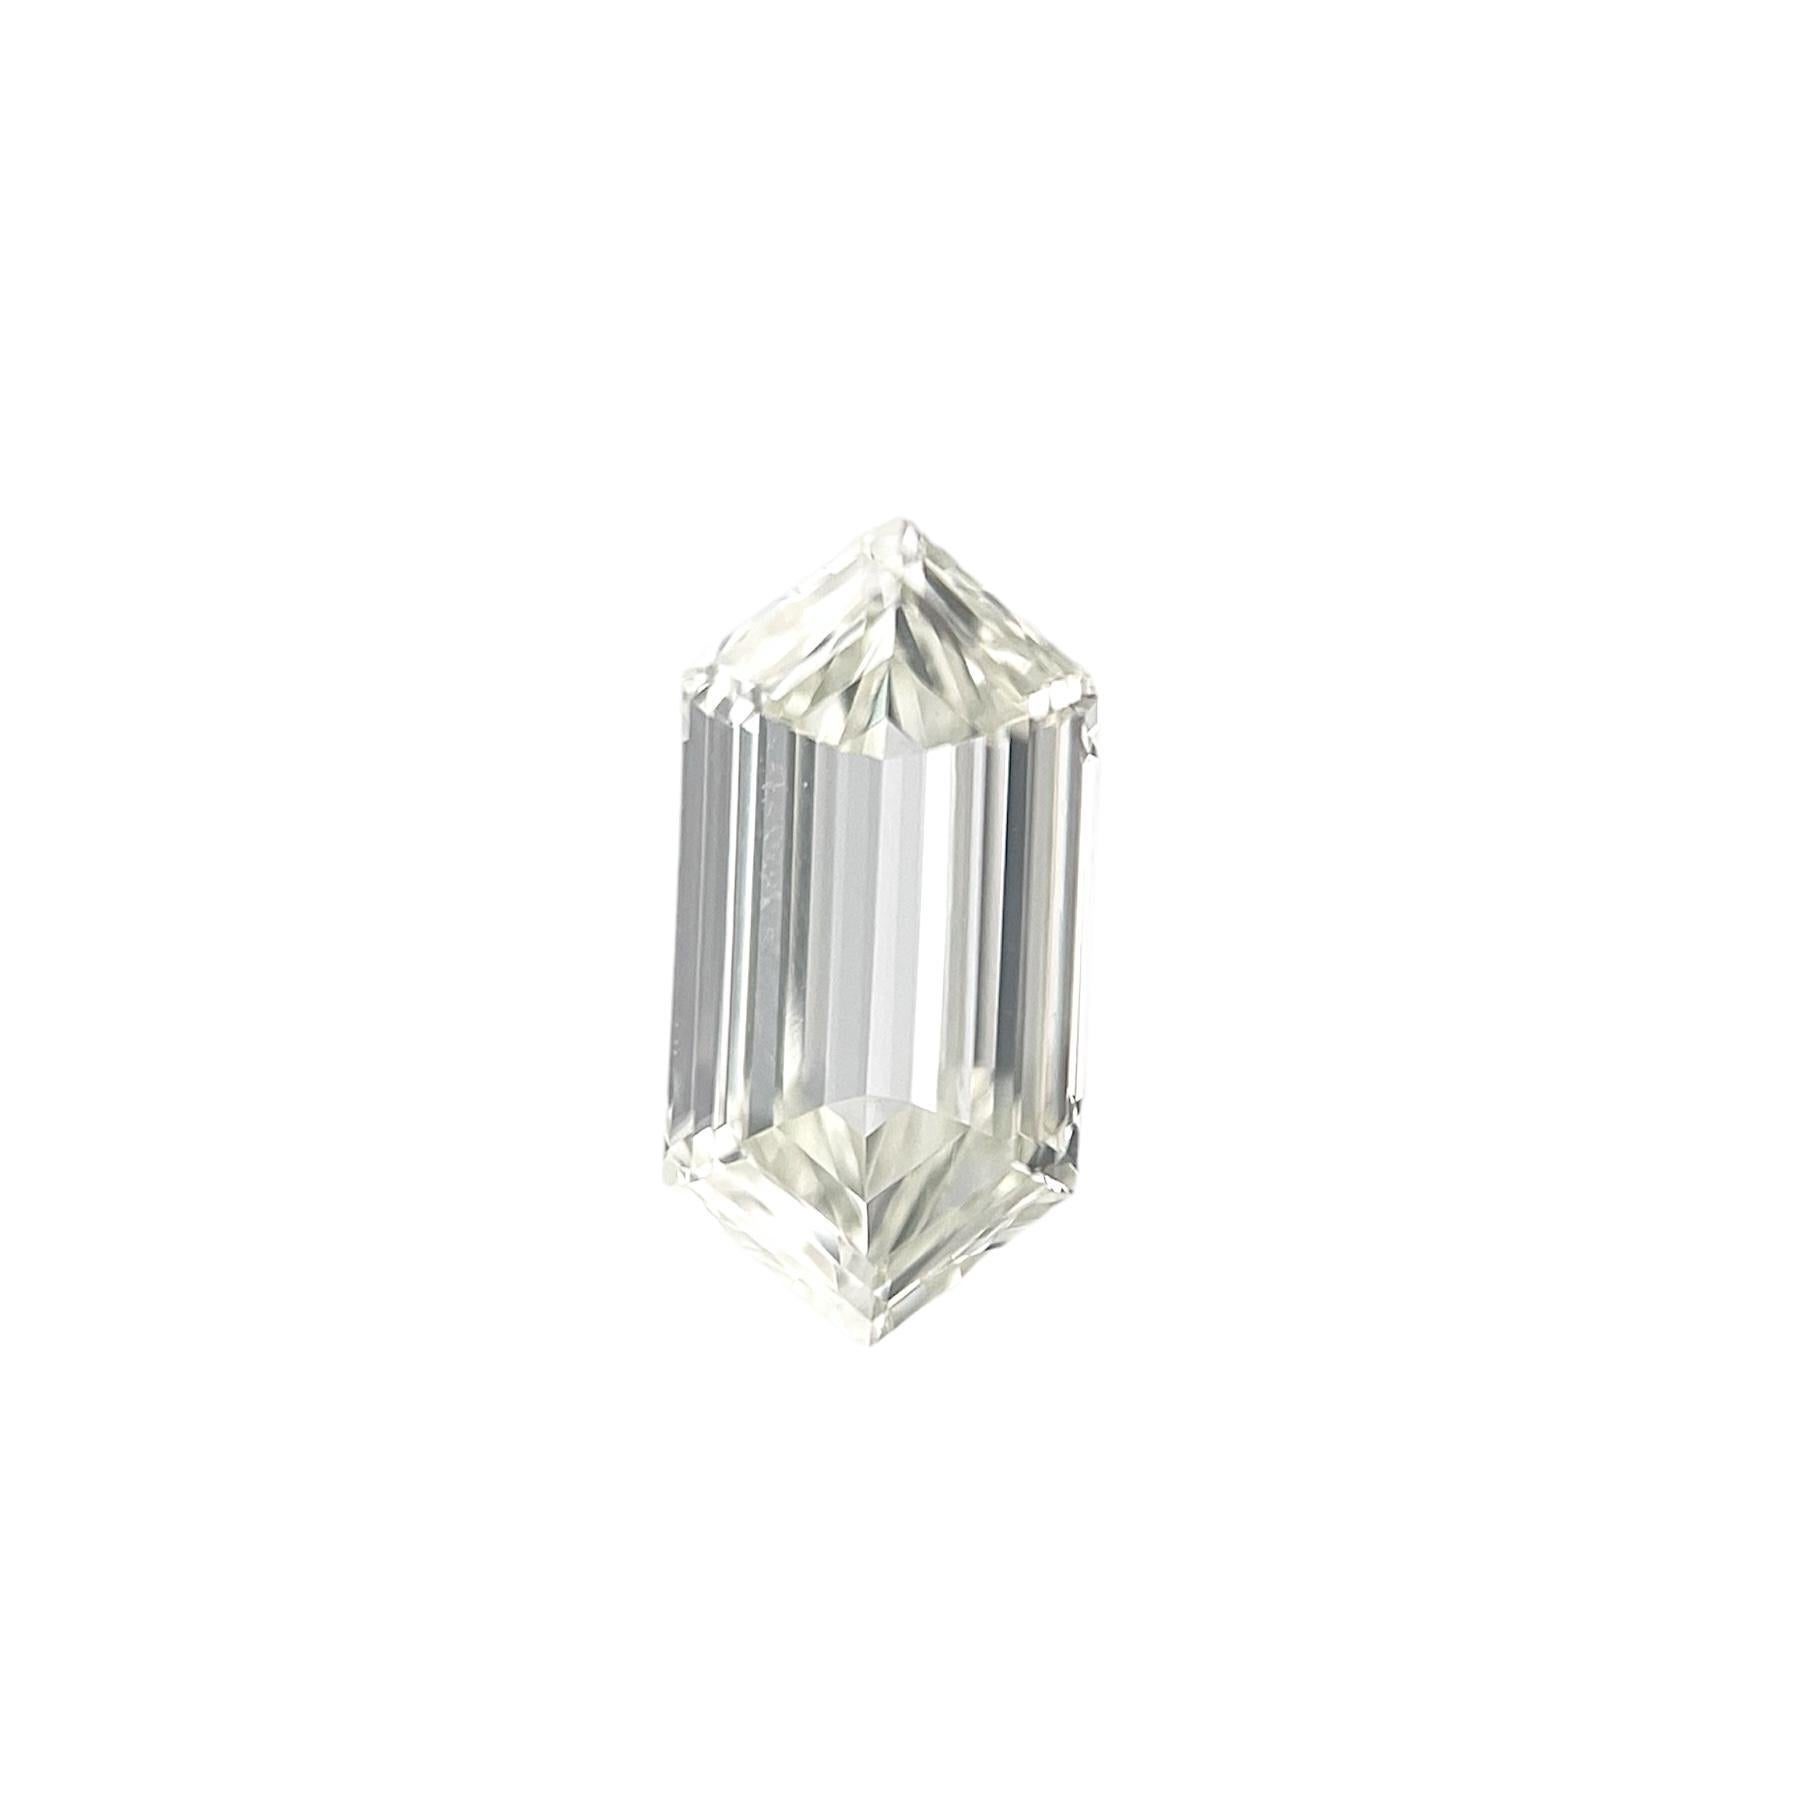 ITEM DESCRIPTION

ID #: NYC57473
Stone Shape: Hexagonal 
Diamond Weight: 0.67 carat
Clarity: VS2 
Color: L 
Cut:	Excellent
Measurements: 8.02X4.08.2.21 mm
Depth : 54.2%
Table %: 	68%
Symmetry: EXCELLECT 
Polish: Good
Fluorescence: FAINT 
Certifying